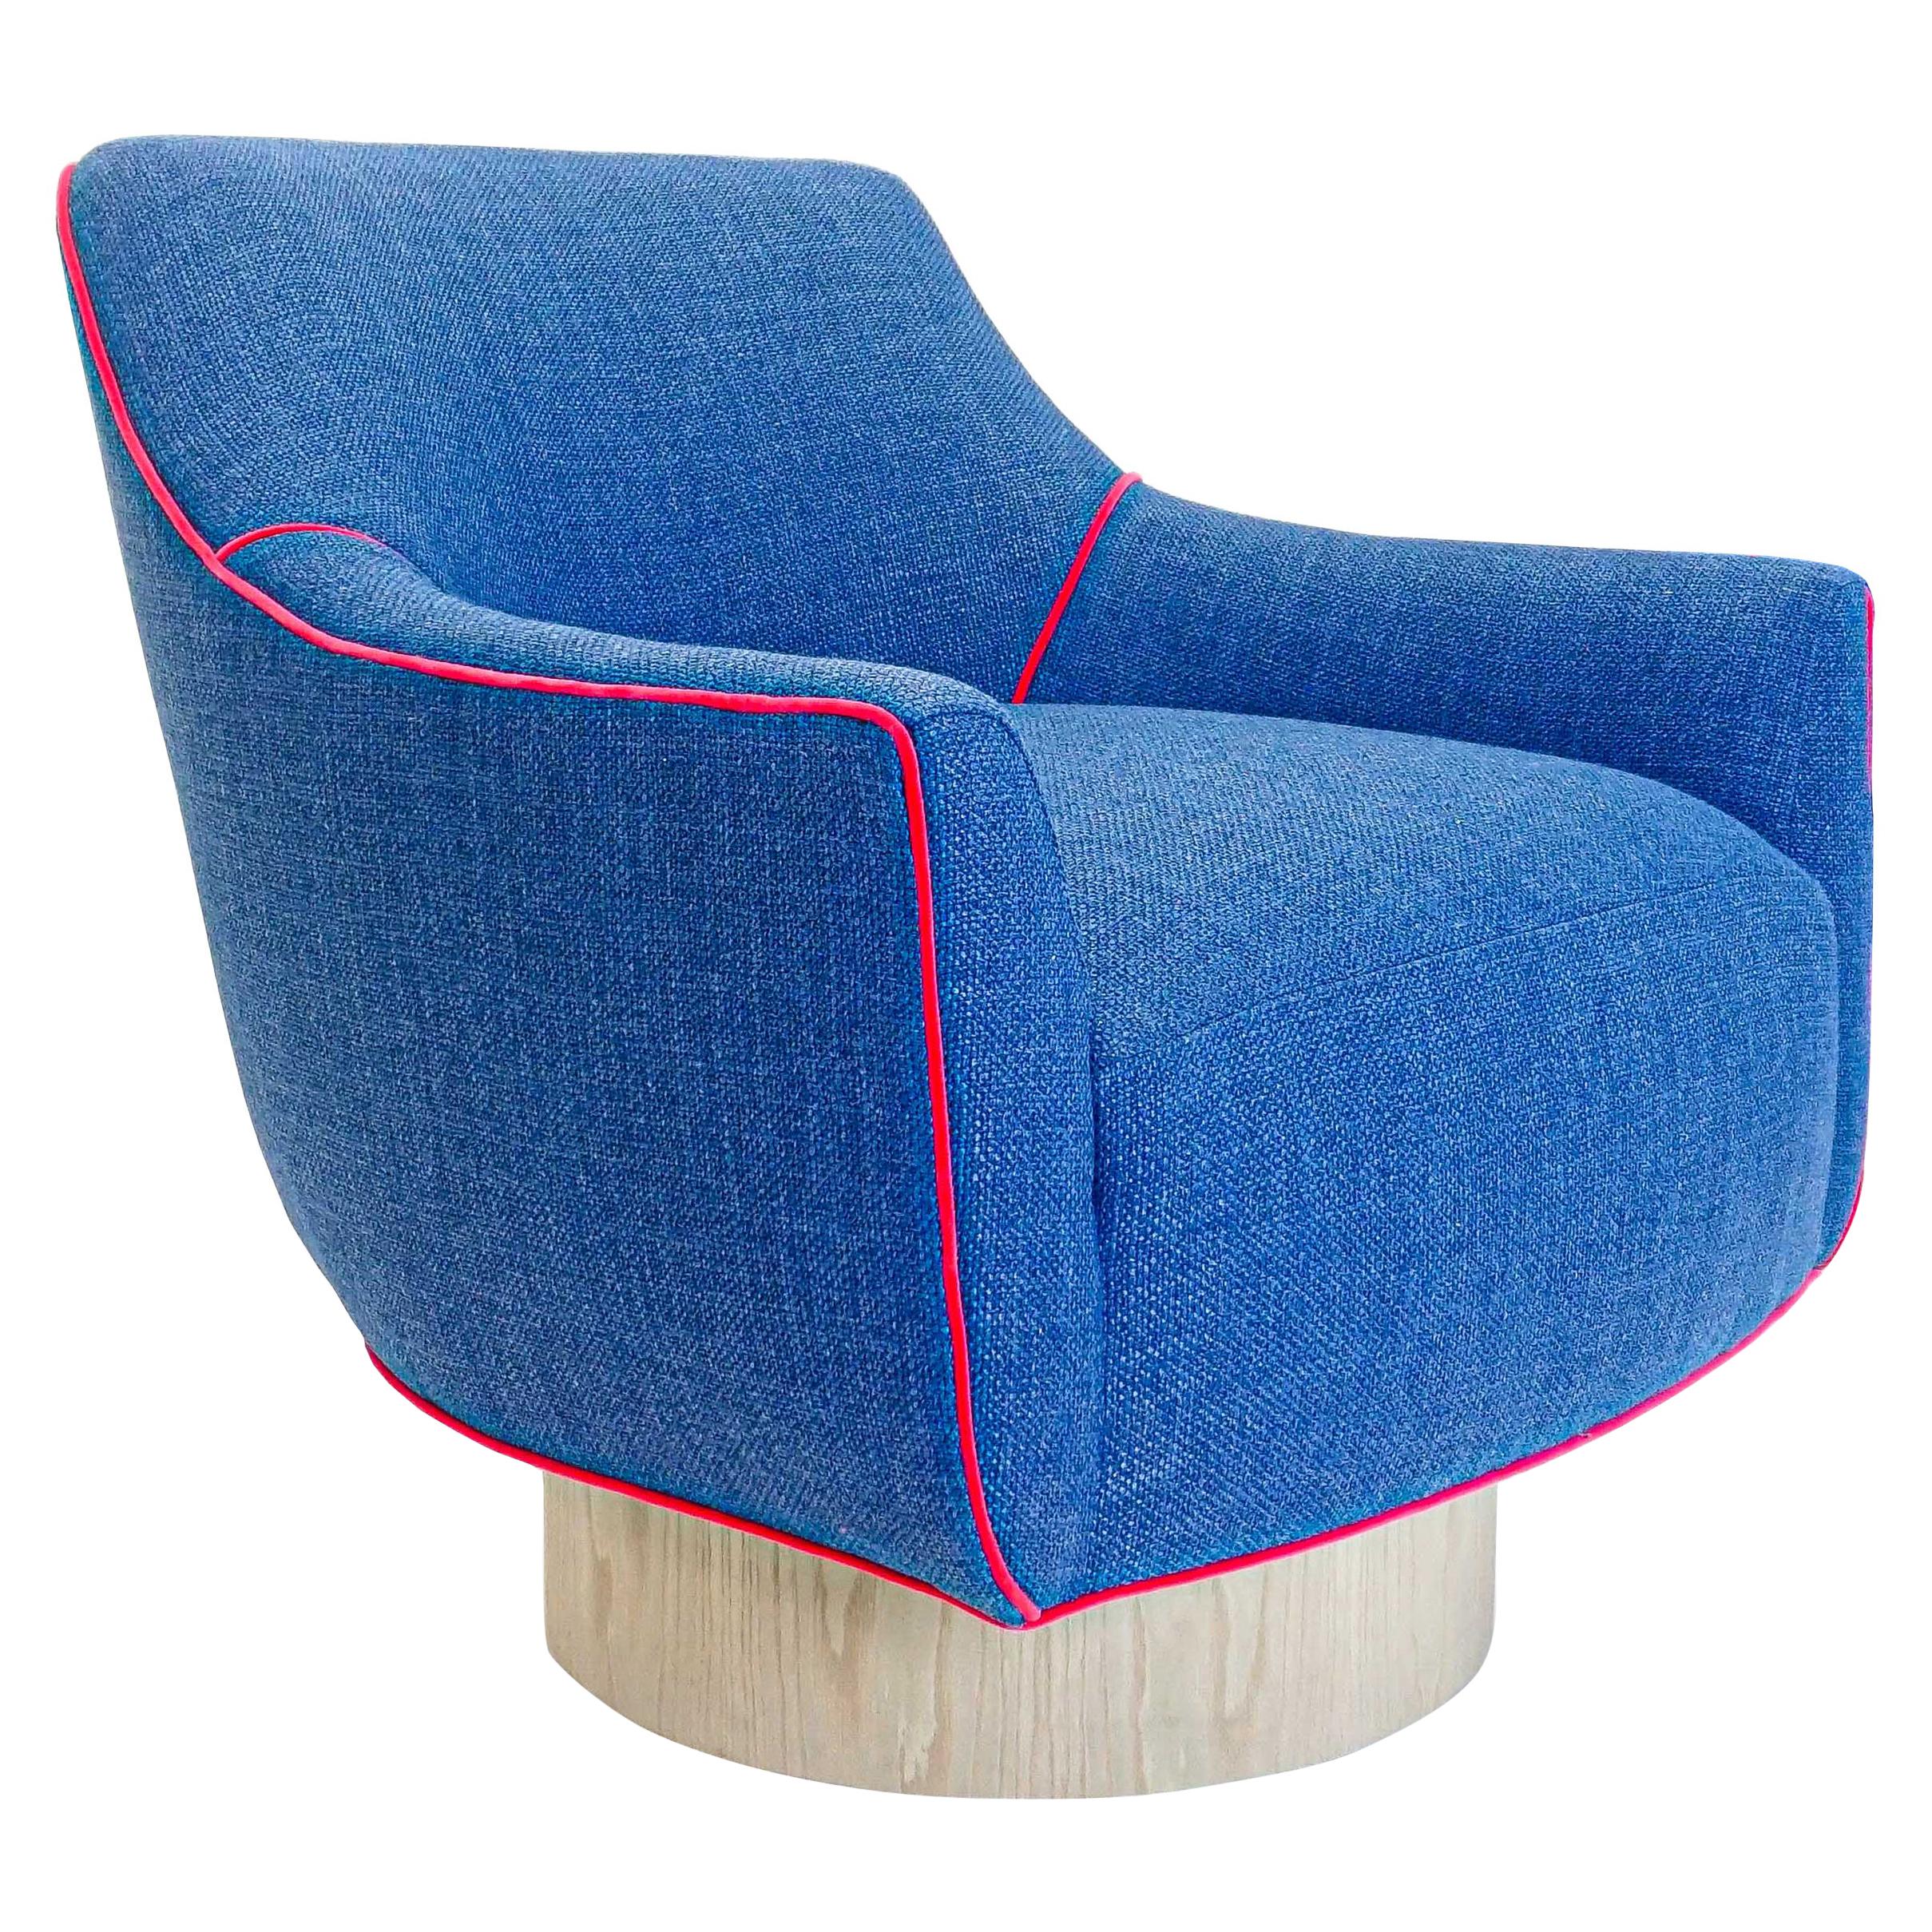 Modern Swivel Chair in Blue Woven and Fuchsia Velvet Accent Welting